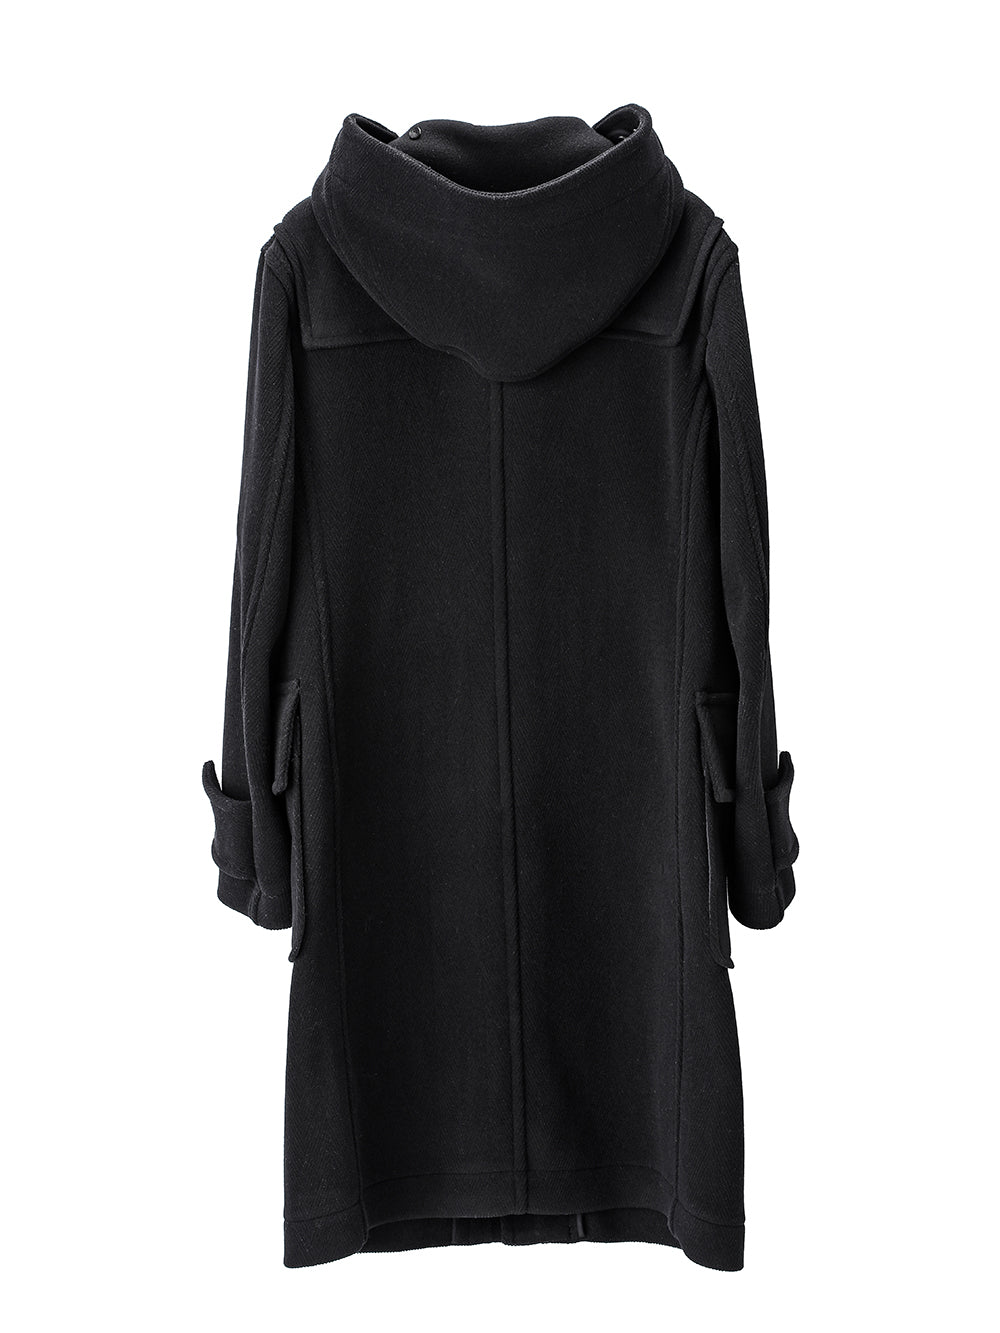 right - left pencil silhouette duffle coat.